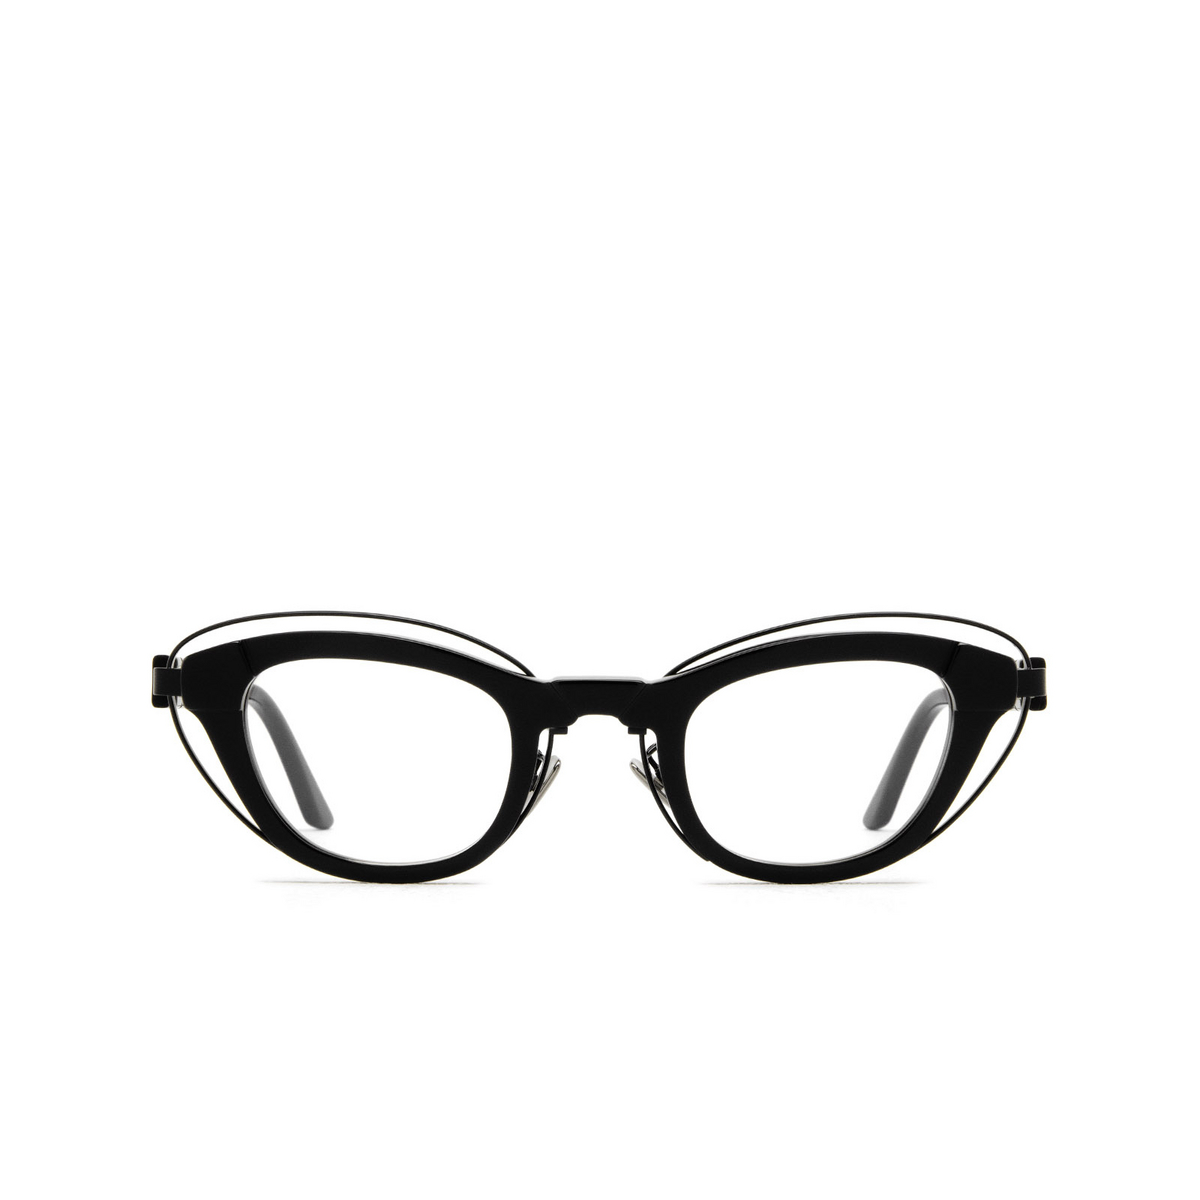 Kuboraum® Cat-eye Eyeglasses: N11 color Black Shine Bs - front view.